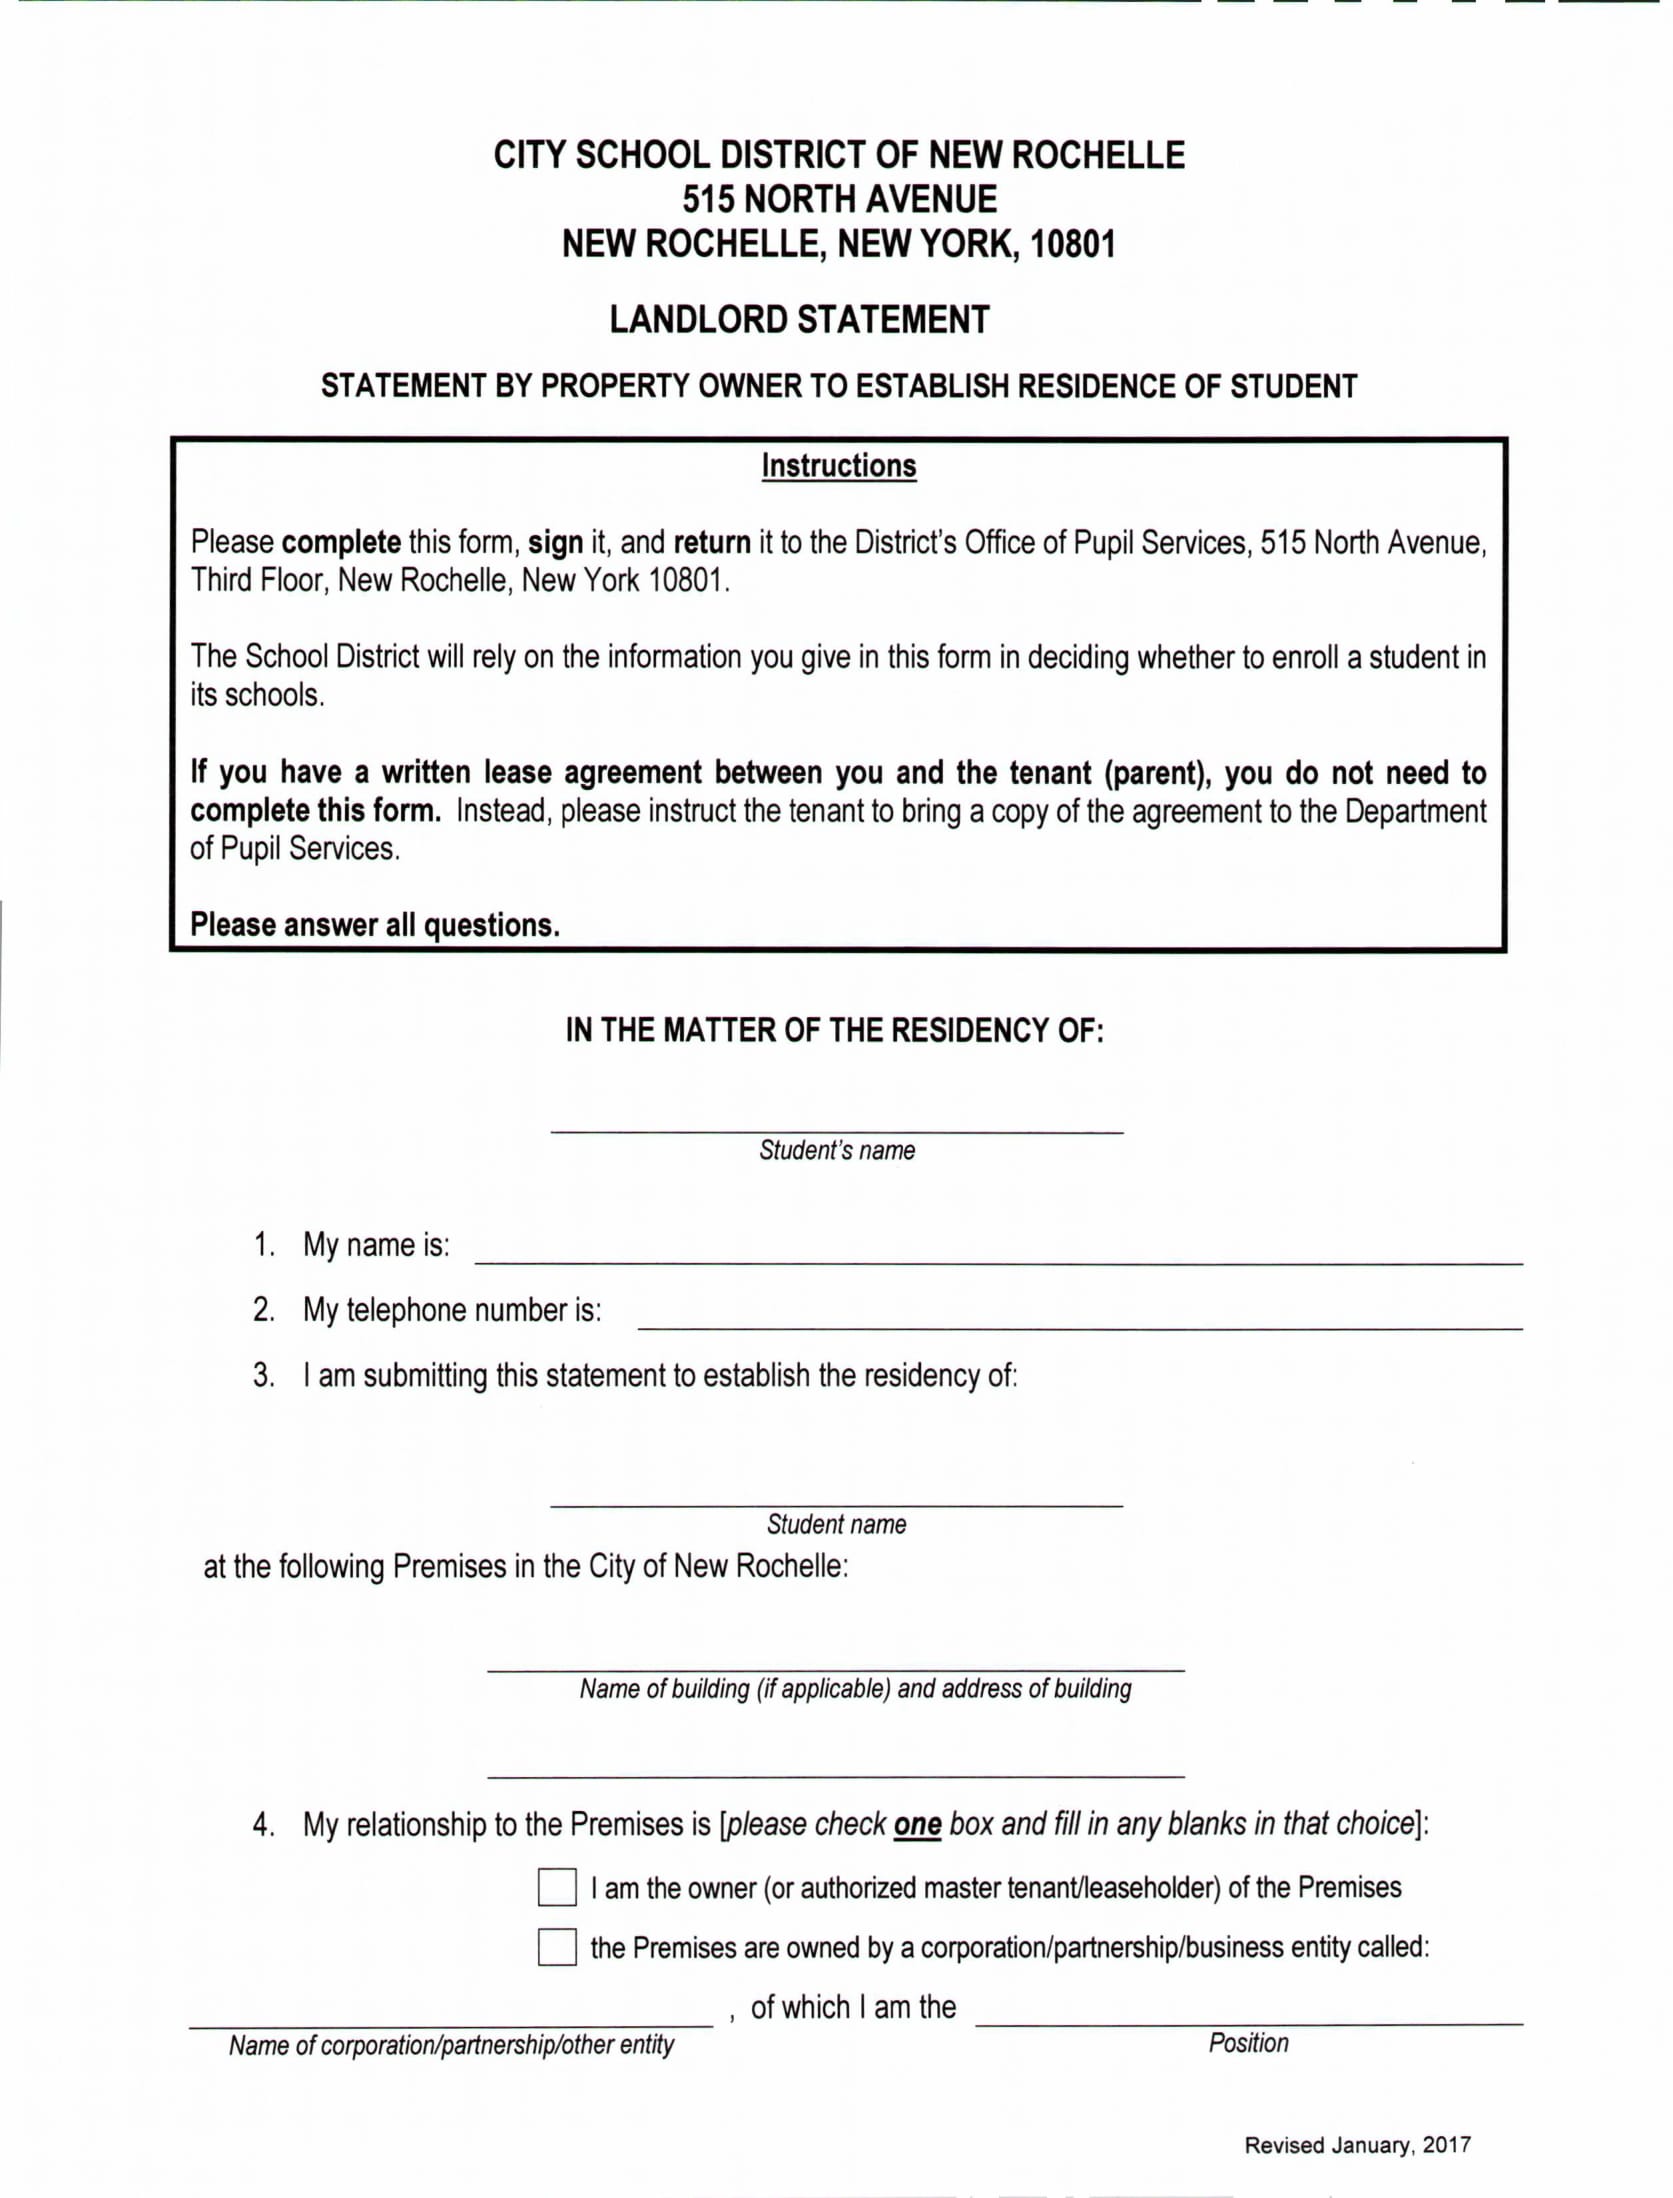 students landlord statement form 1